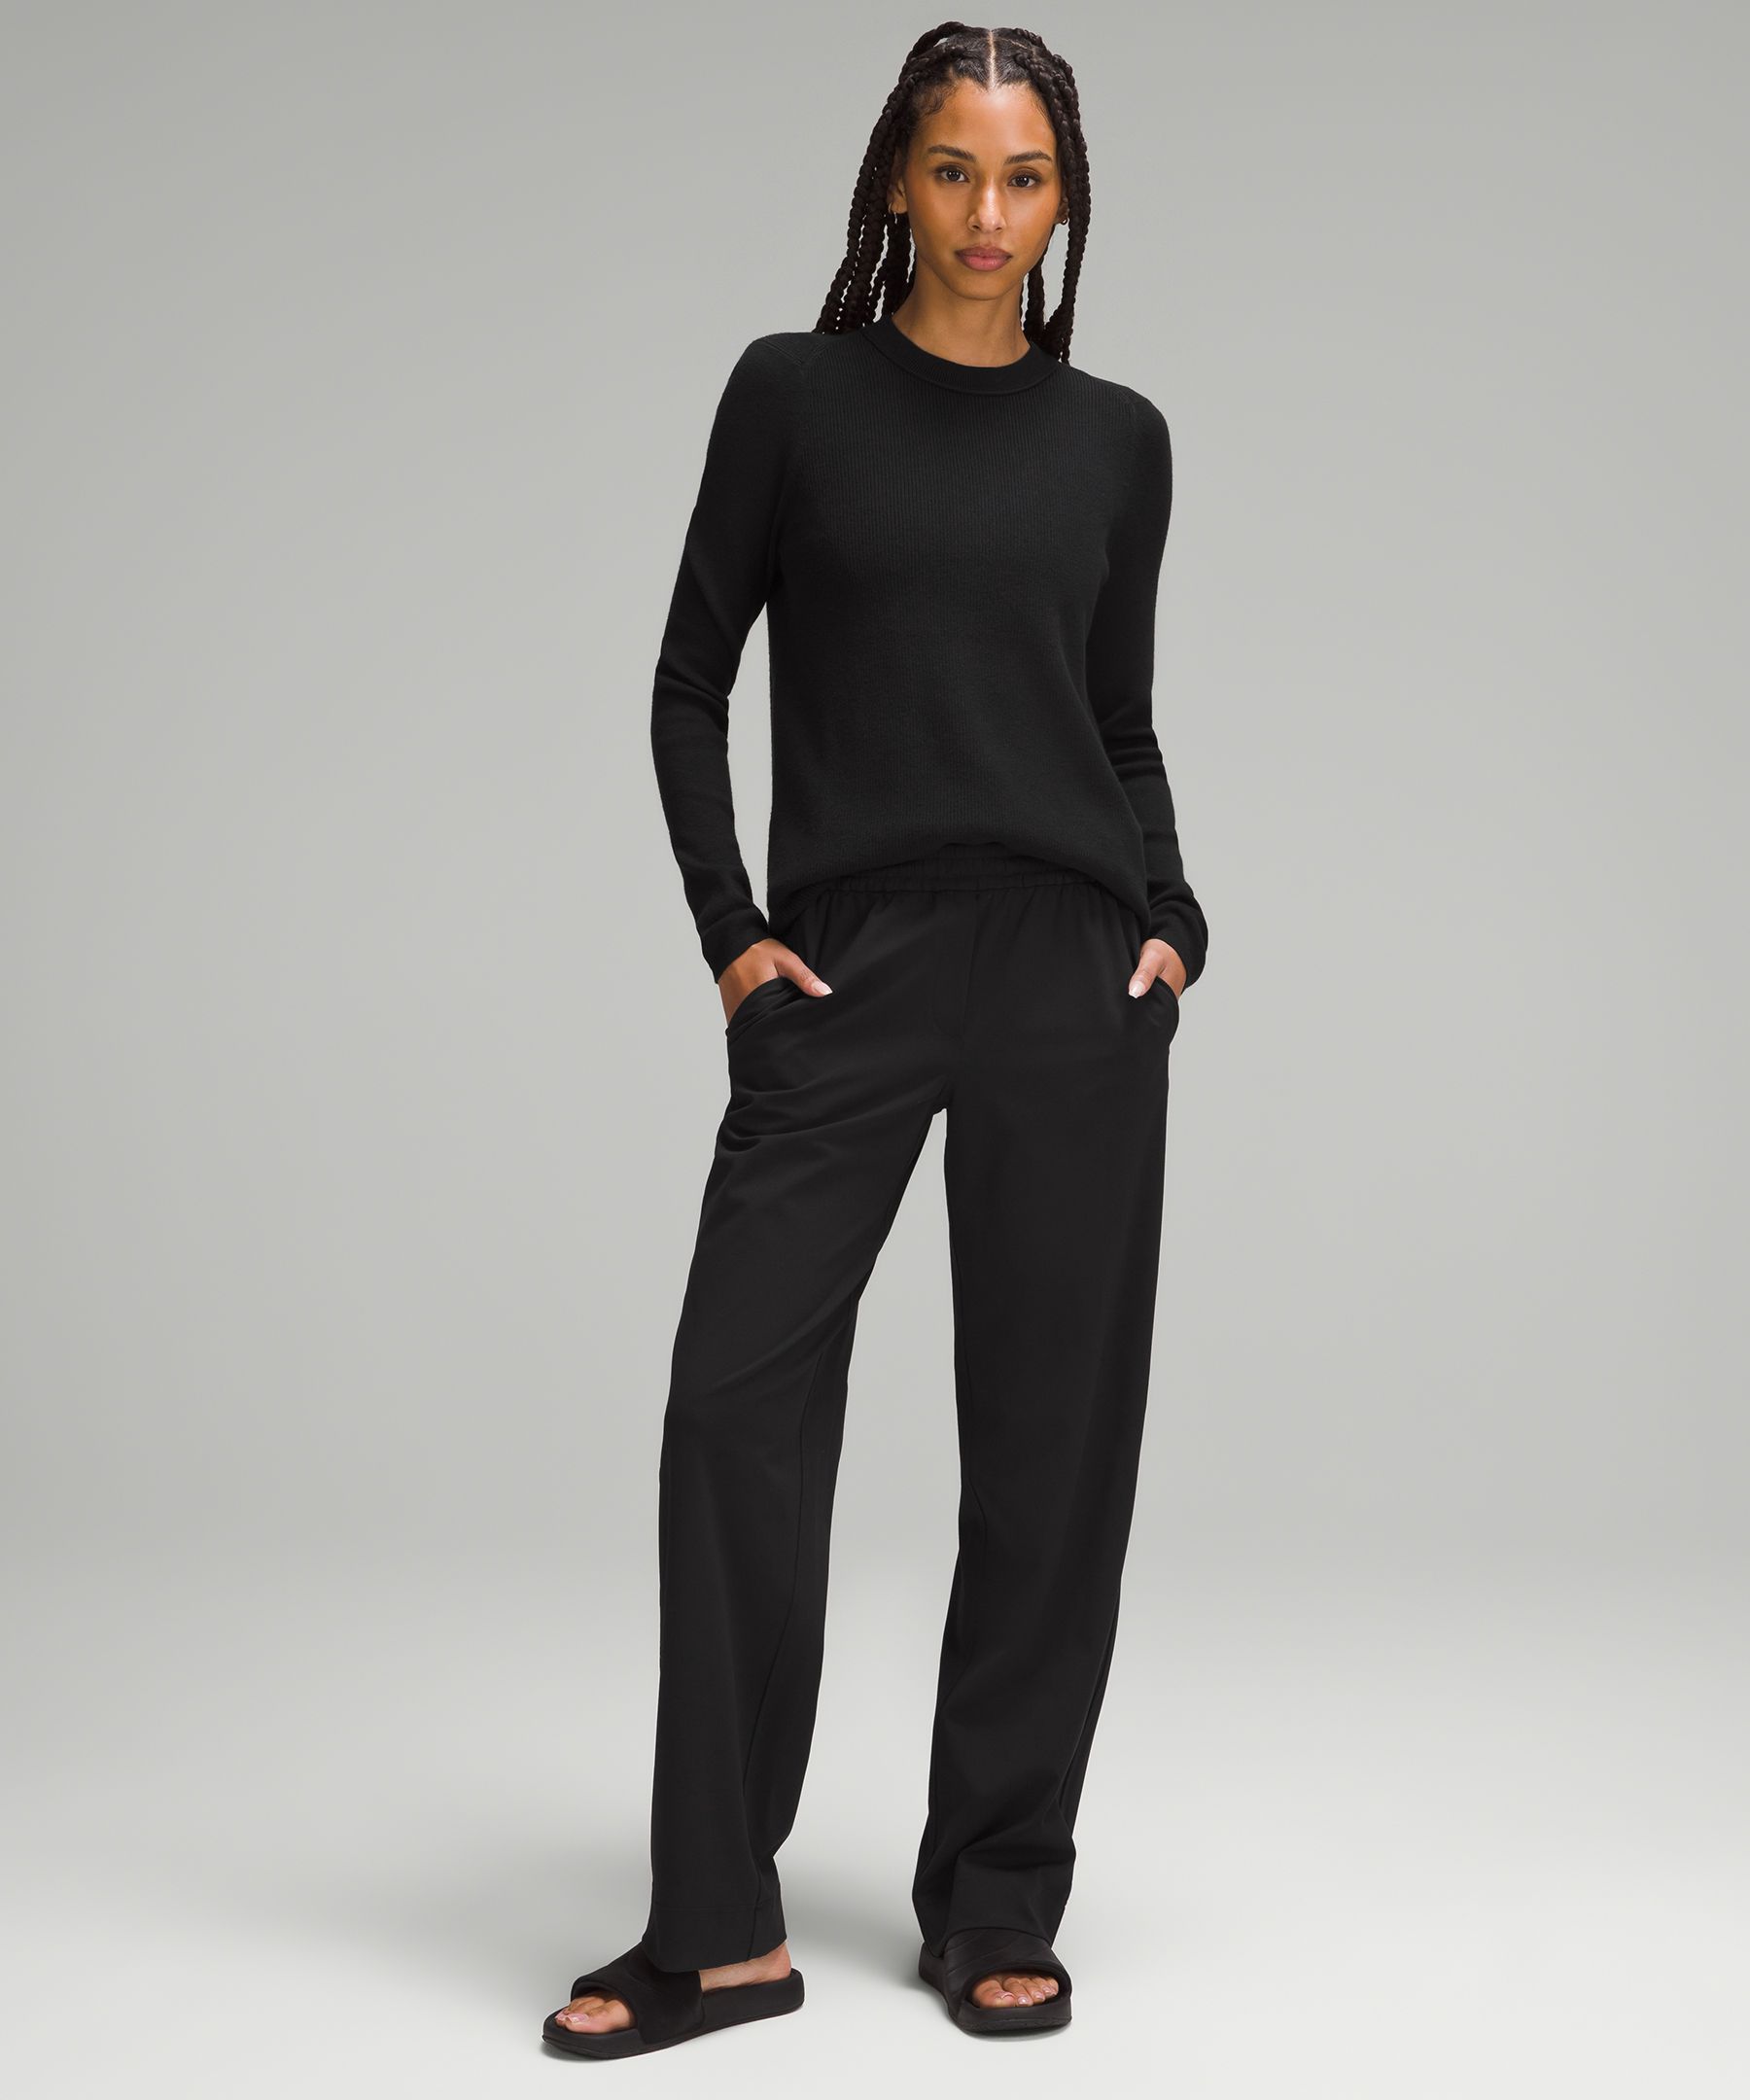 Women's Cold Shoulder Sweater and Matching Pants Set - Khaki